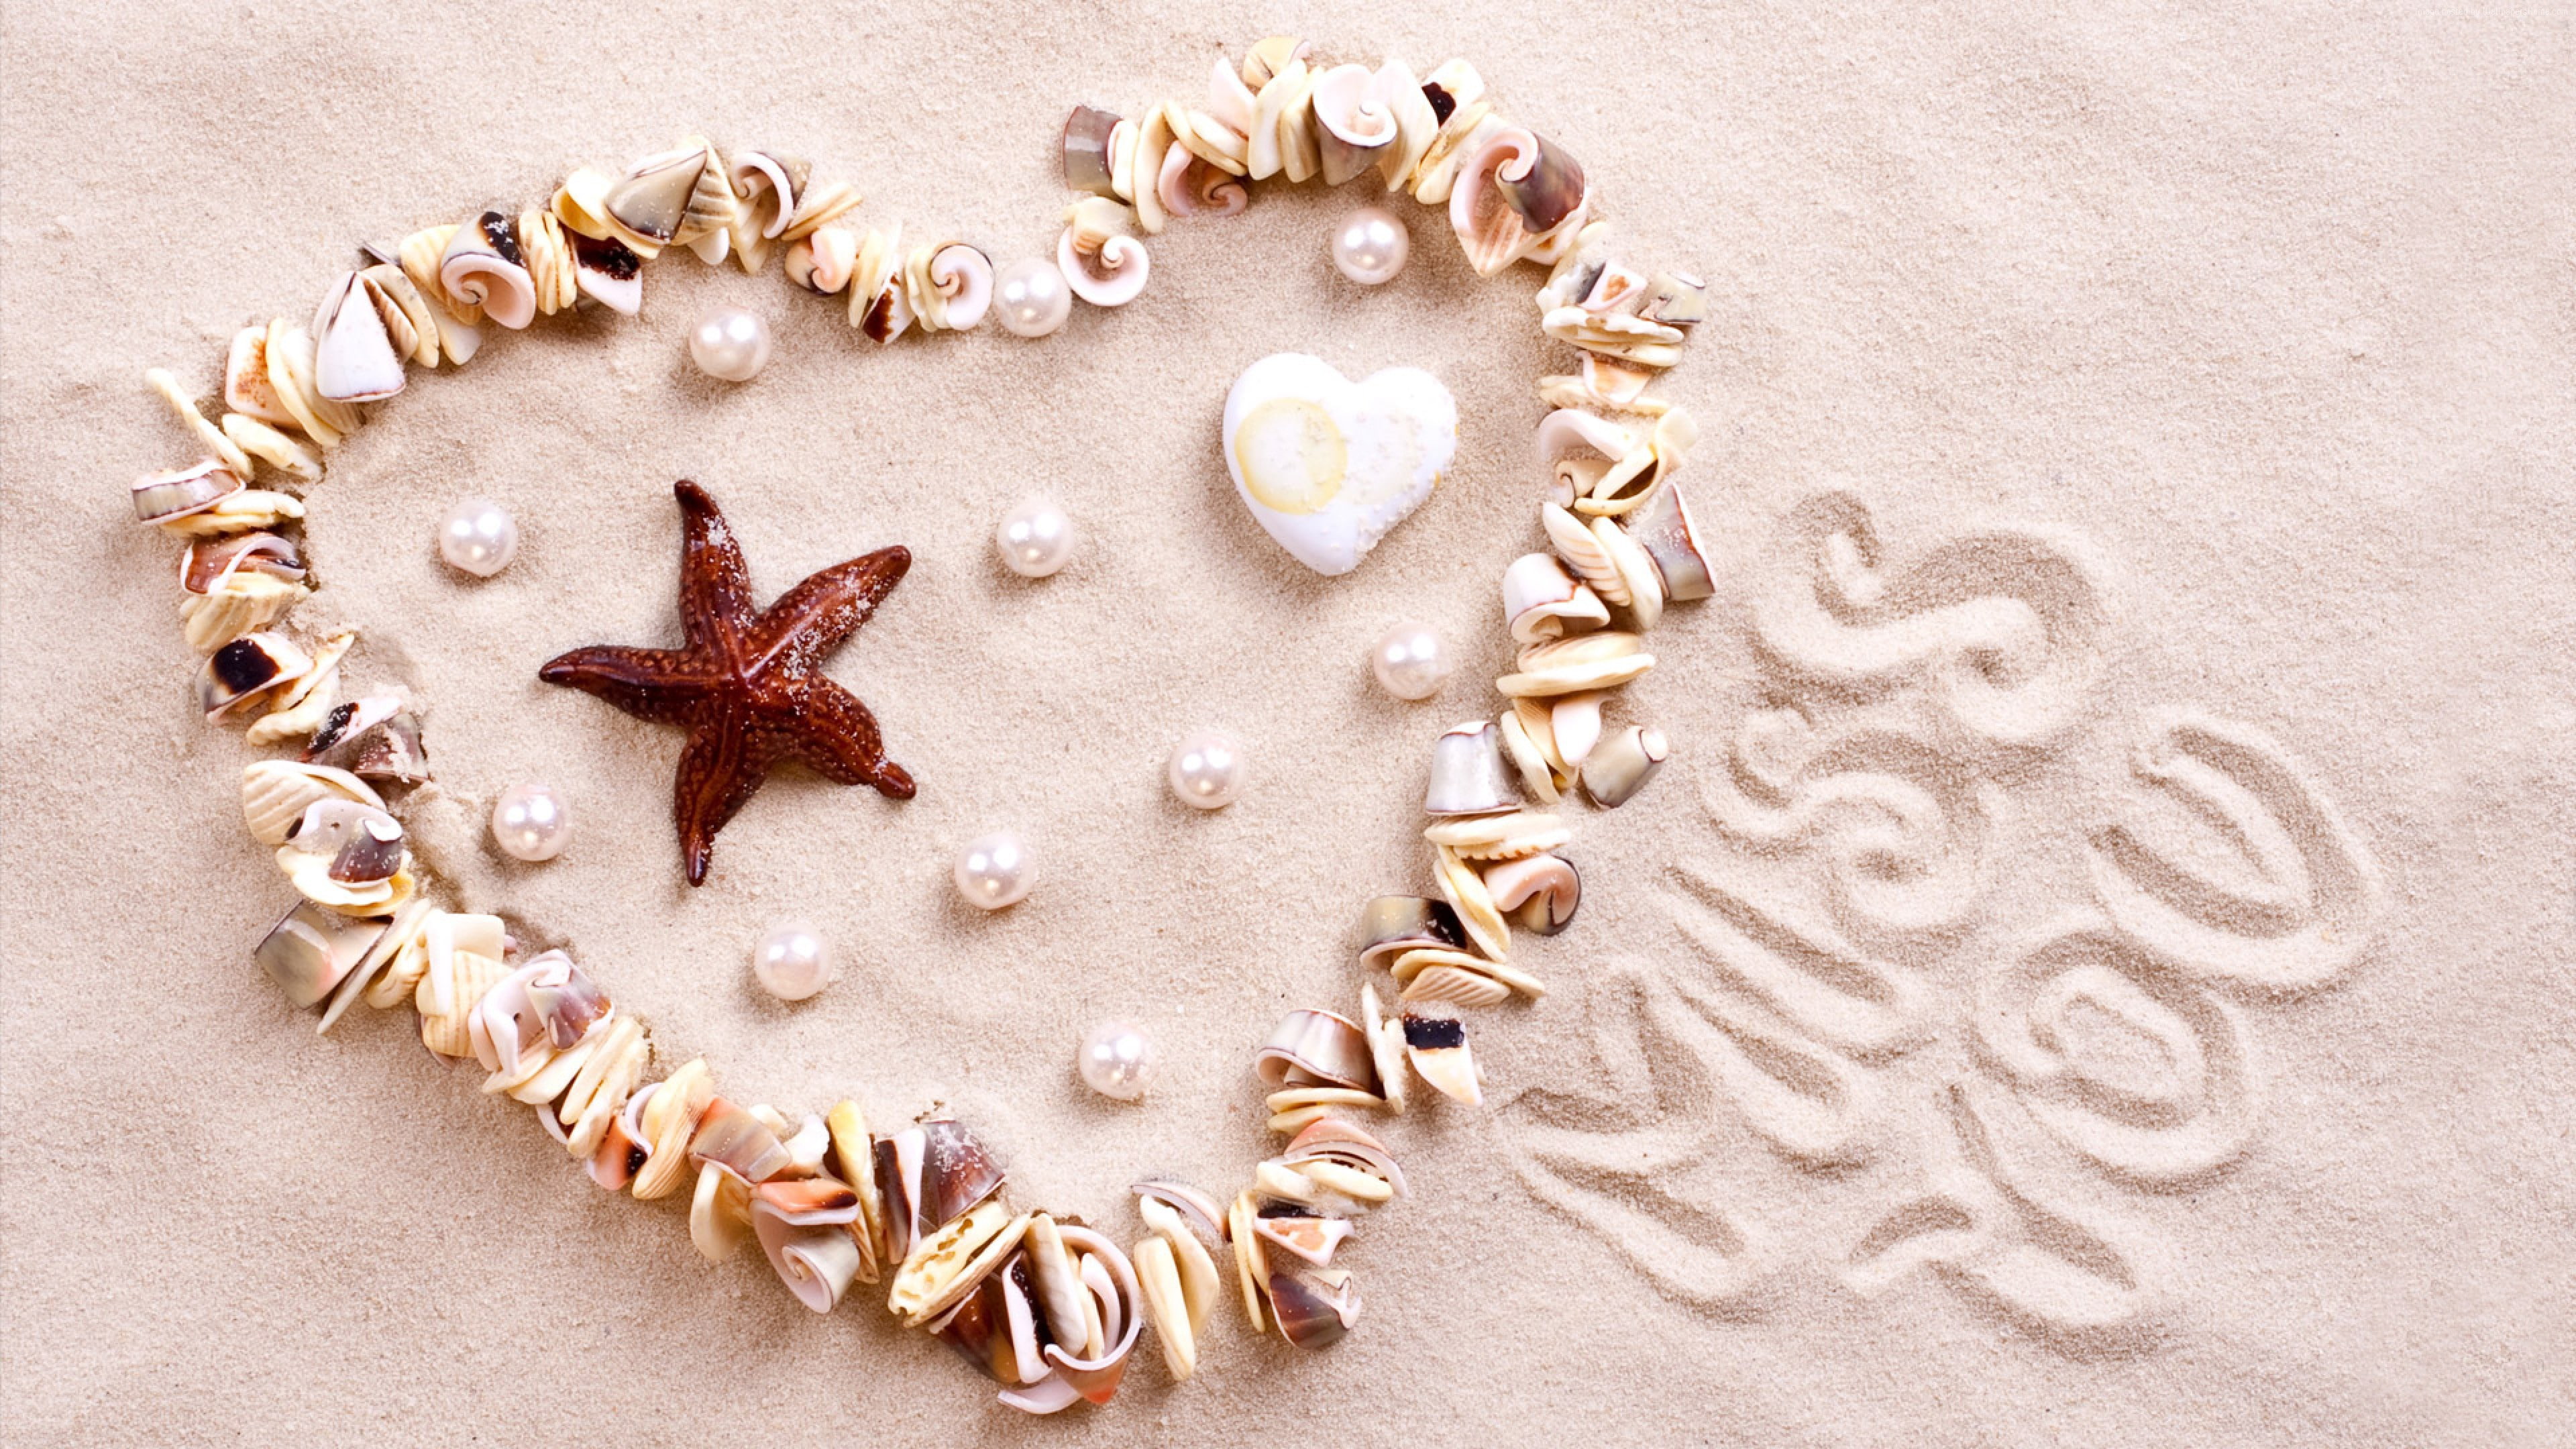 heart, shore, 4K, shell, starfish, love image, high angle view